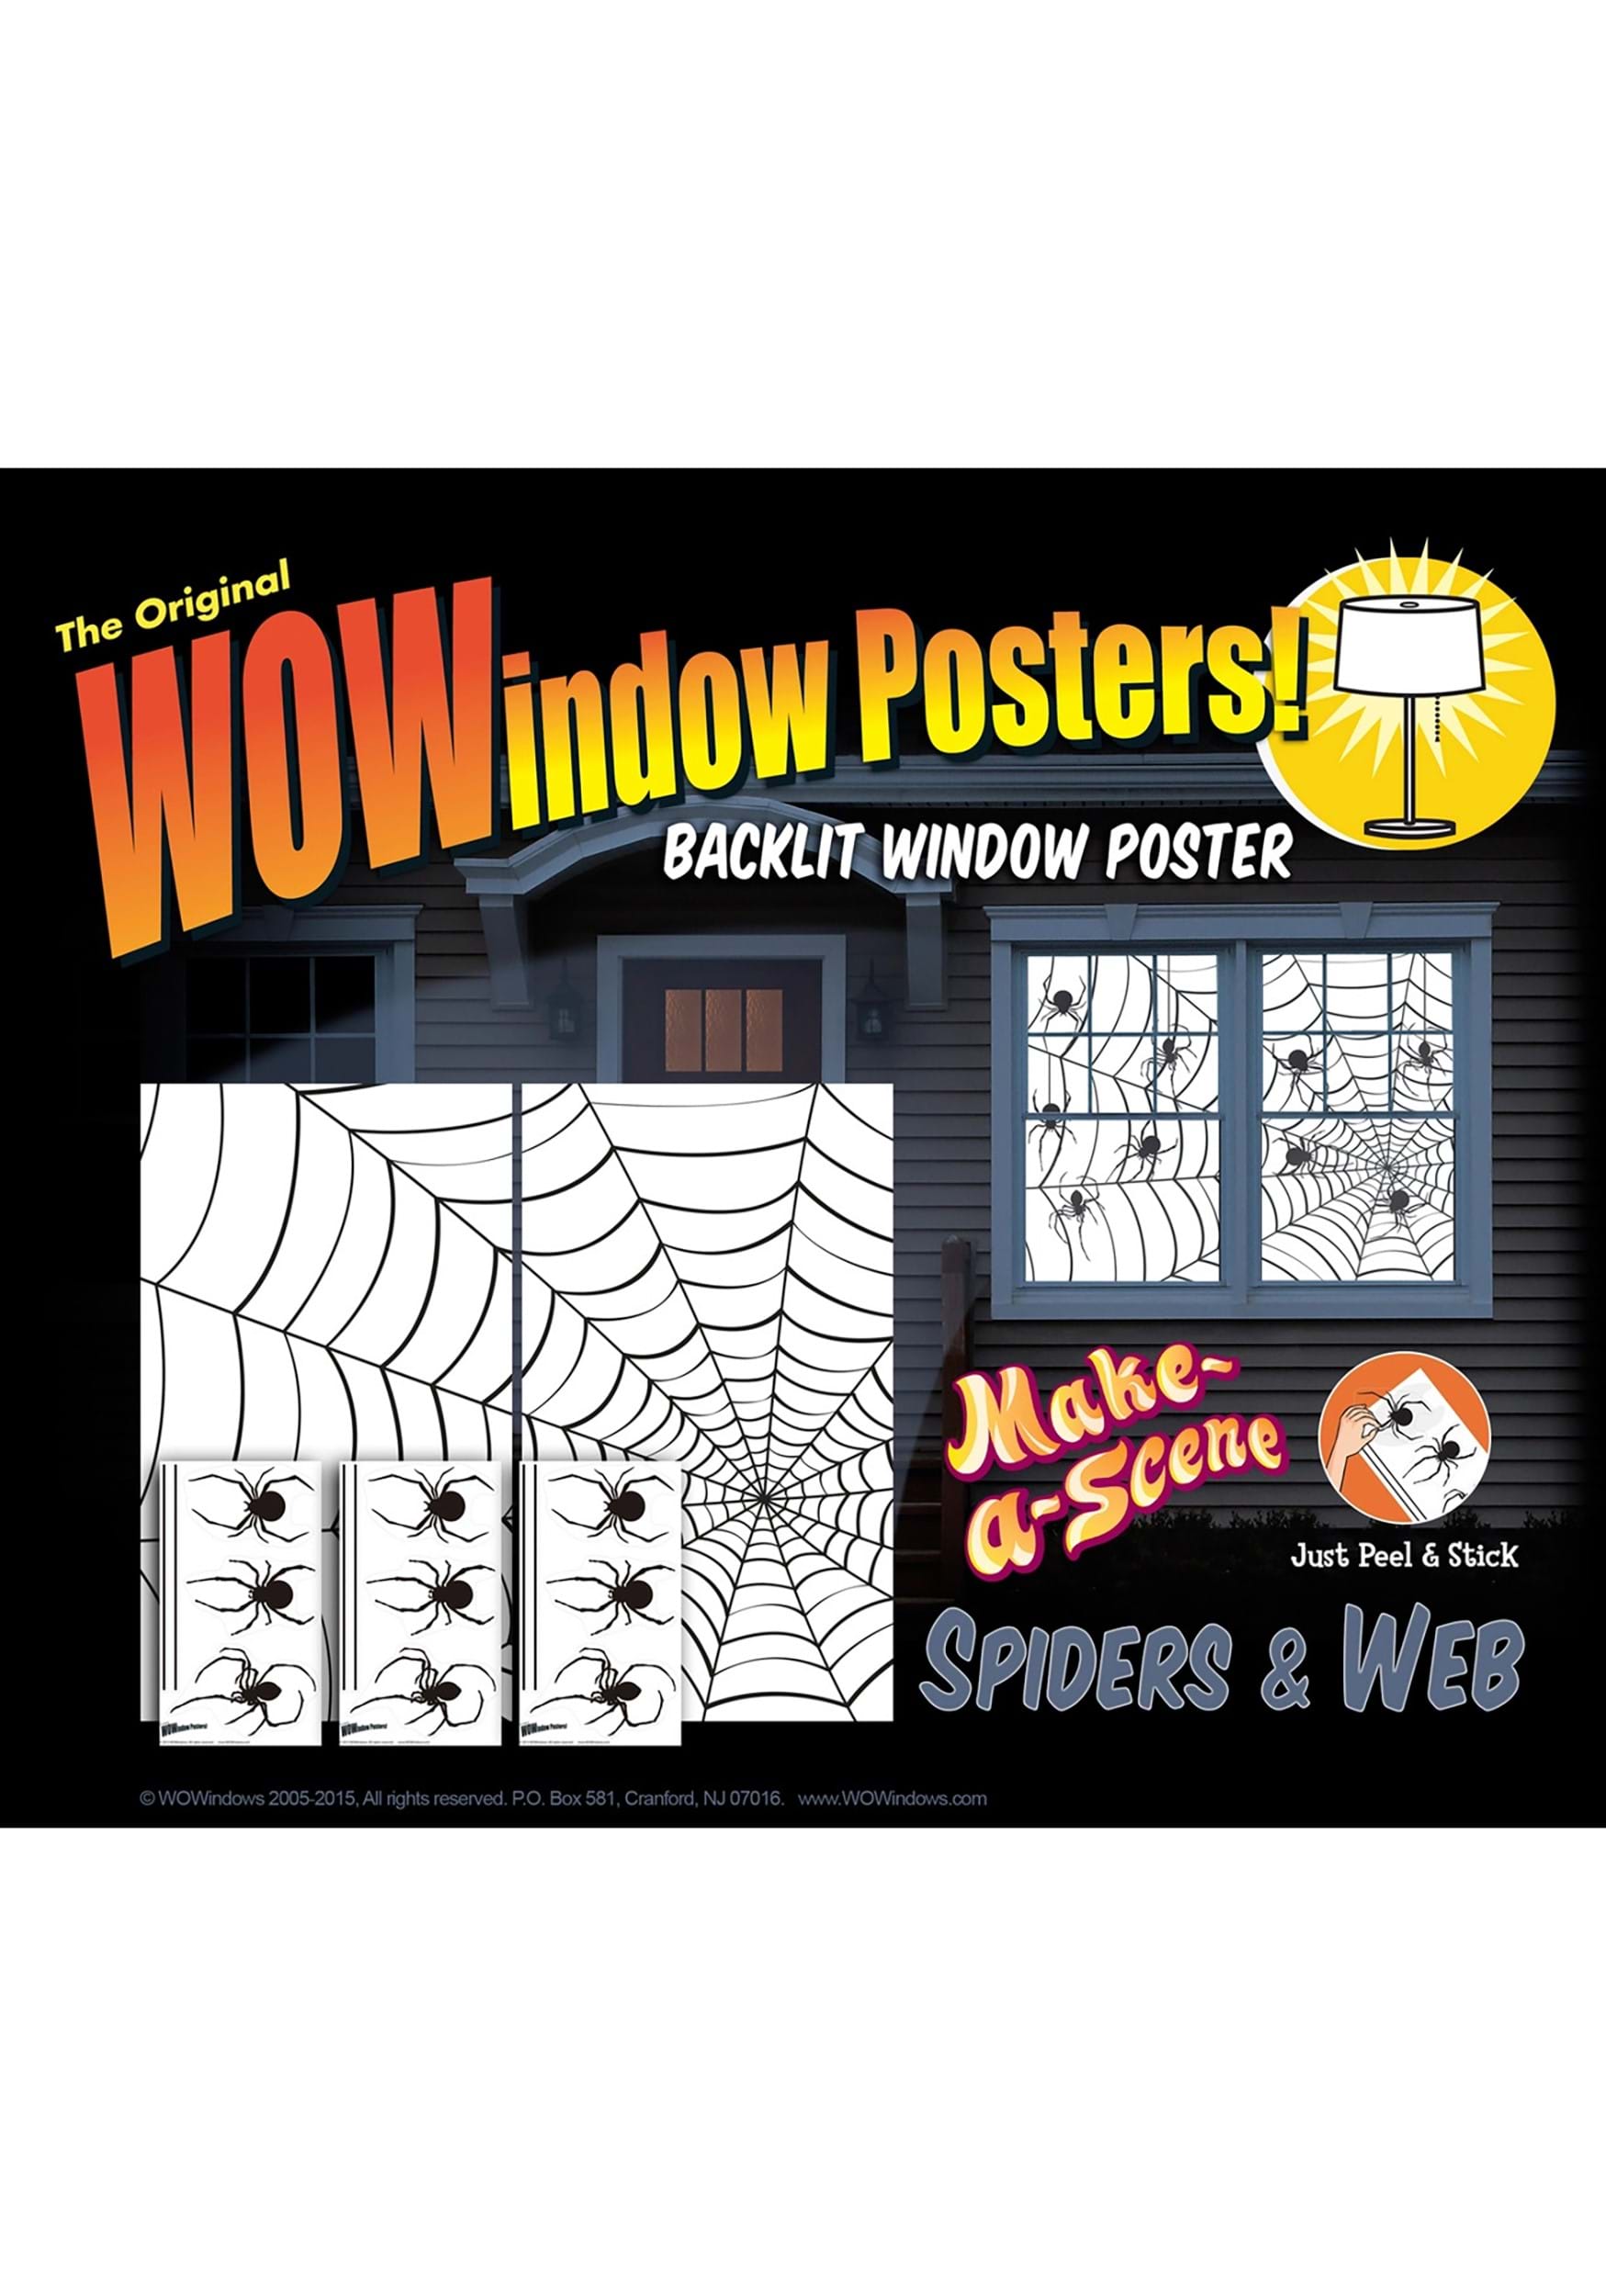 Spider Stickers & Webs Make A Scene Decoration